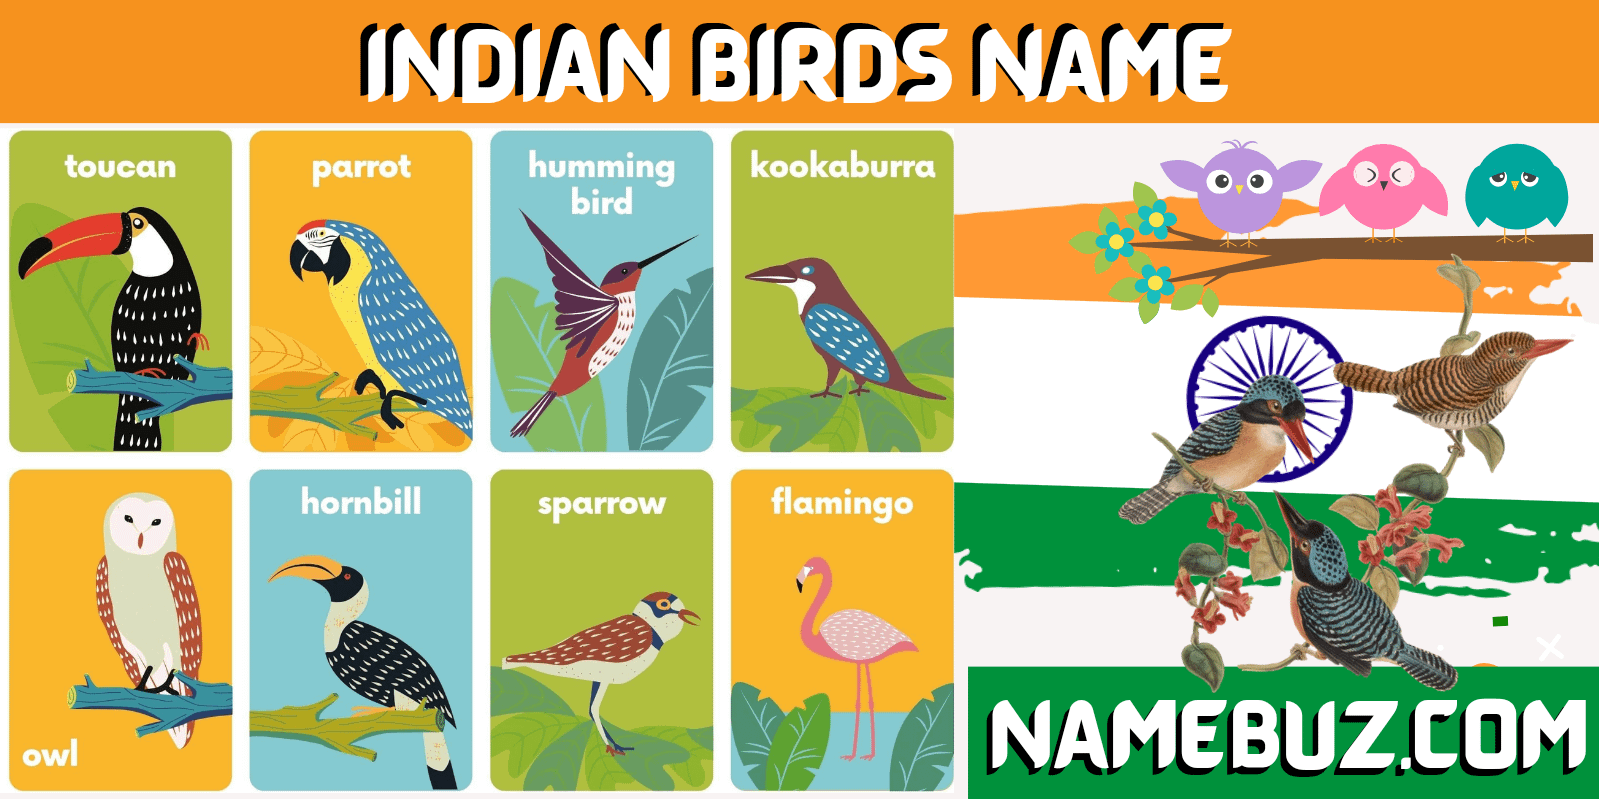 Indian birds name